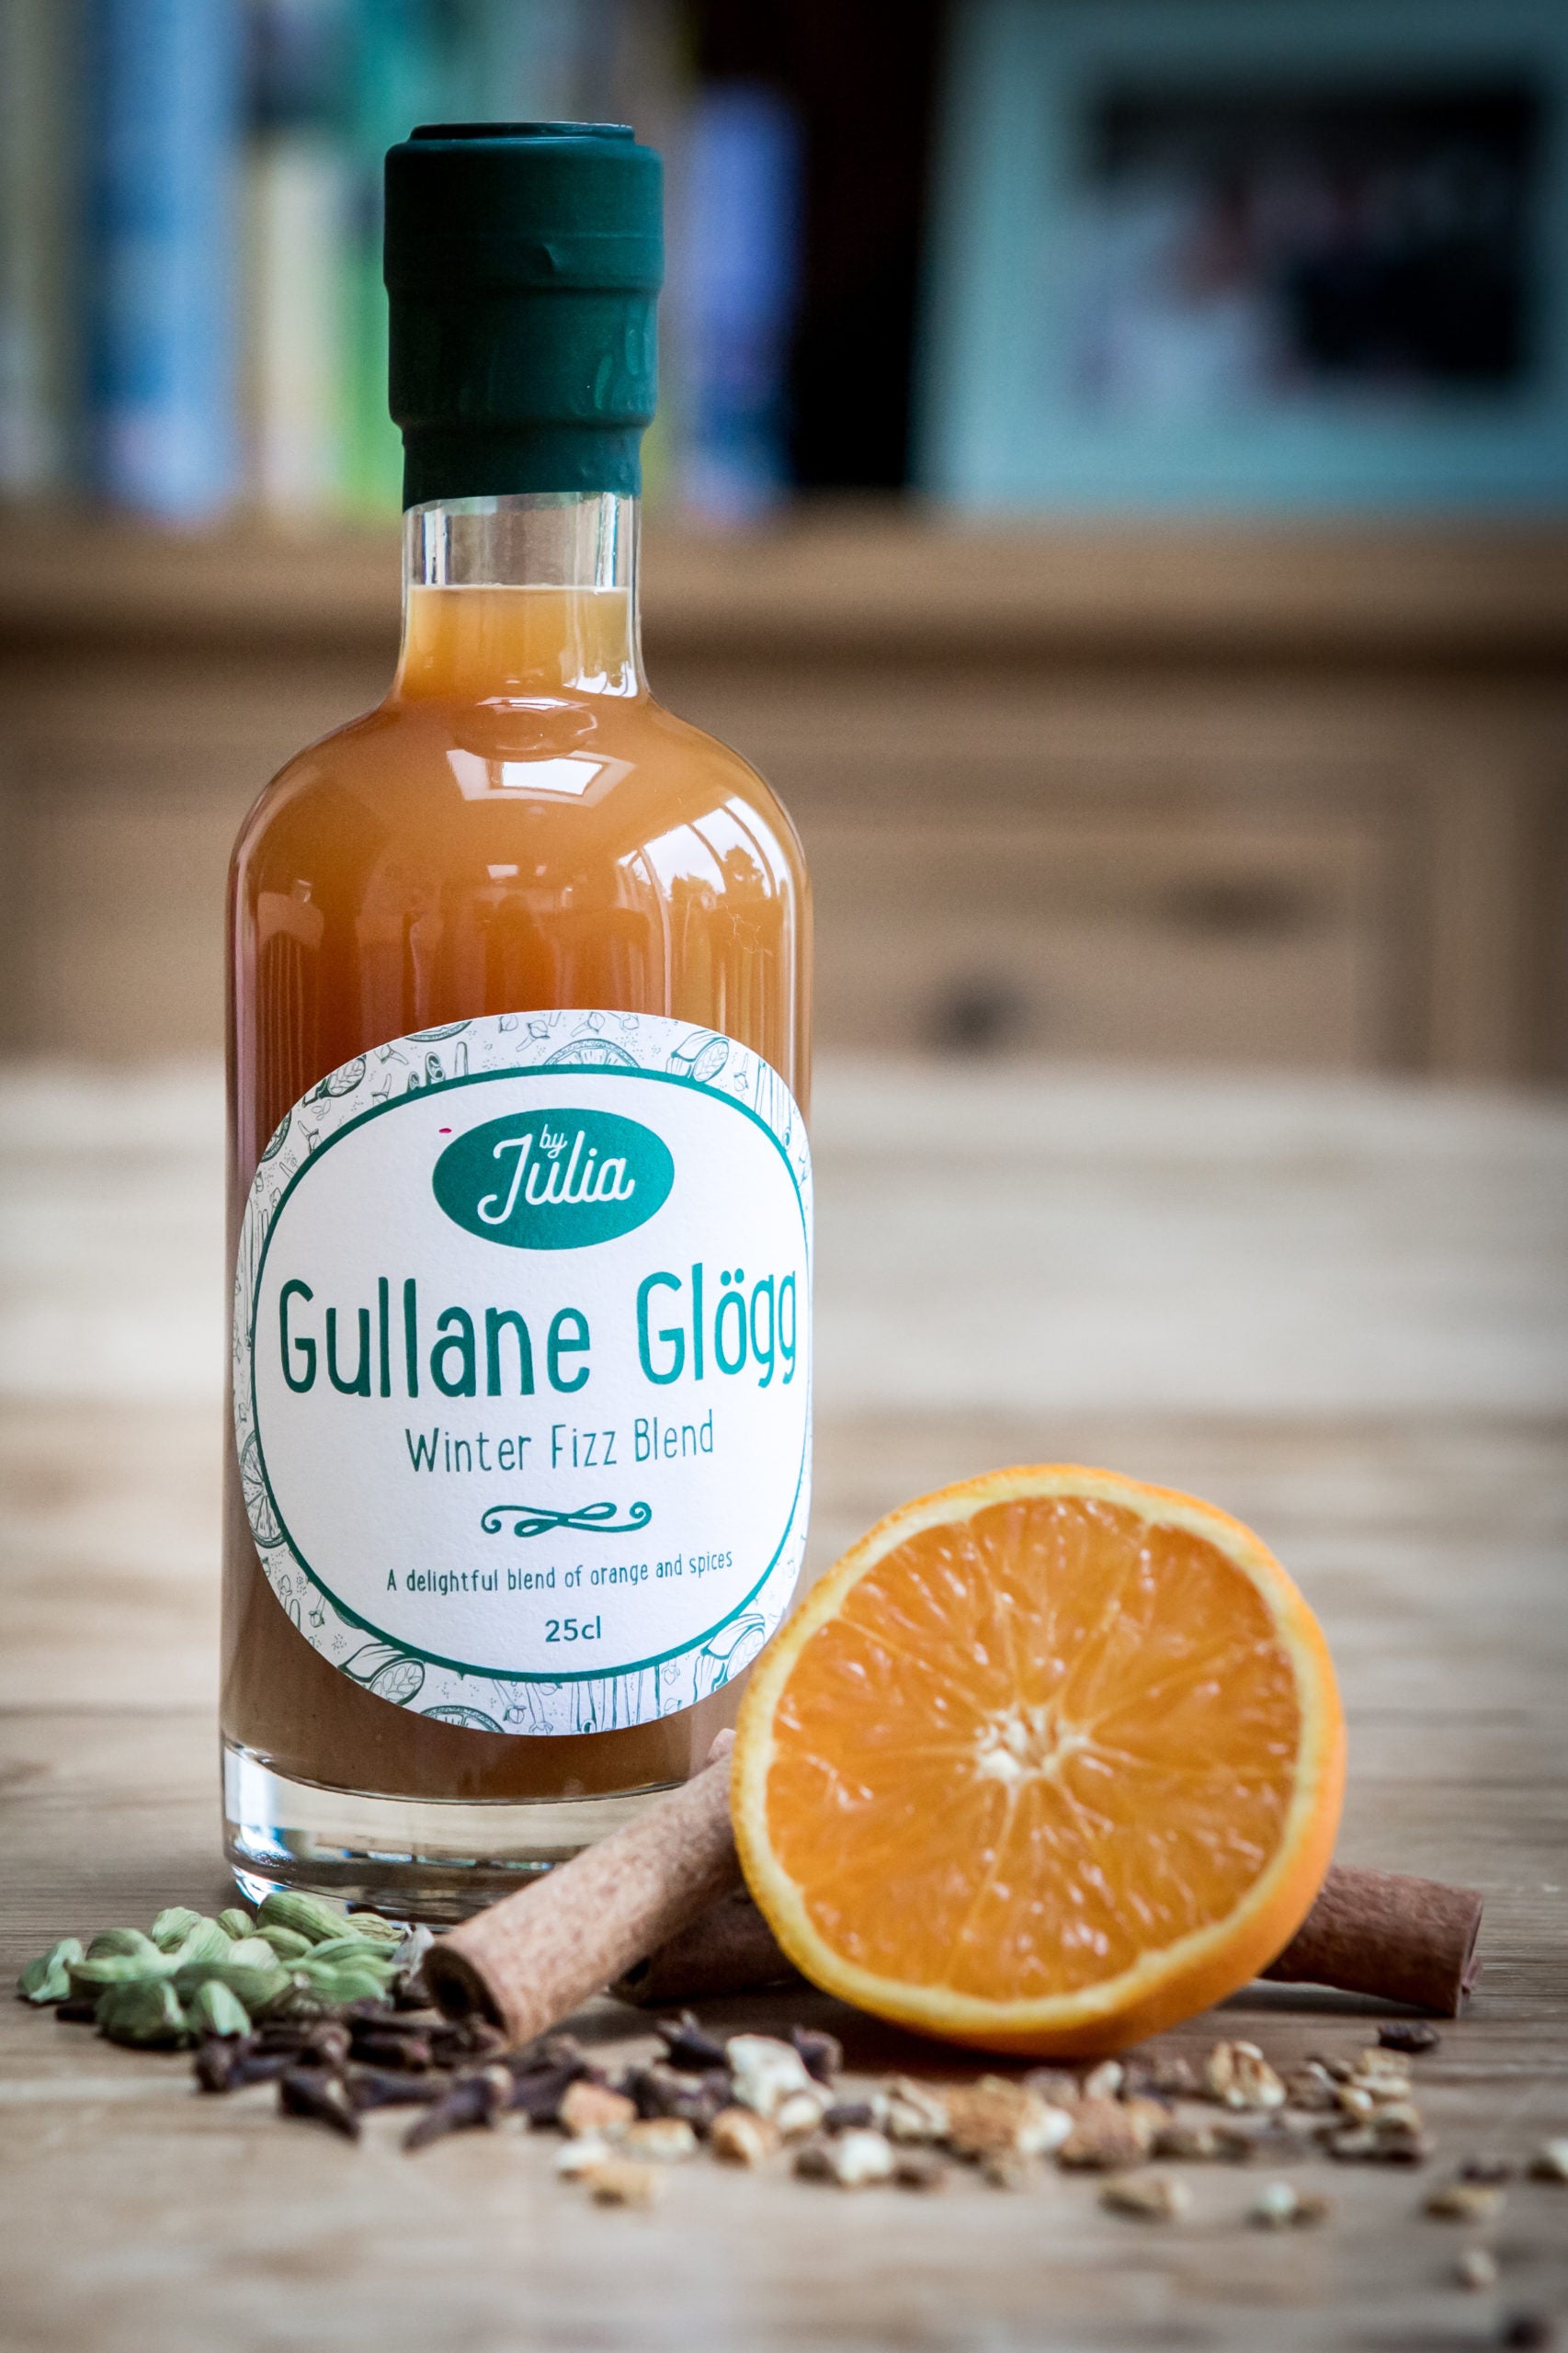 Bottle of Gullane Glogg Winter Fizz Blend with orange and cinnamon